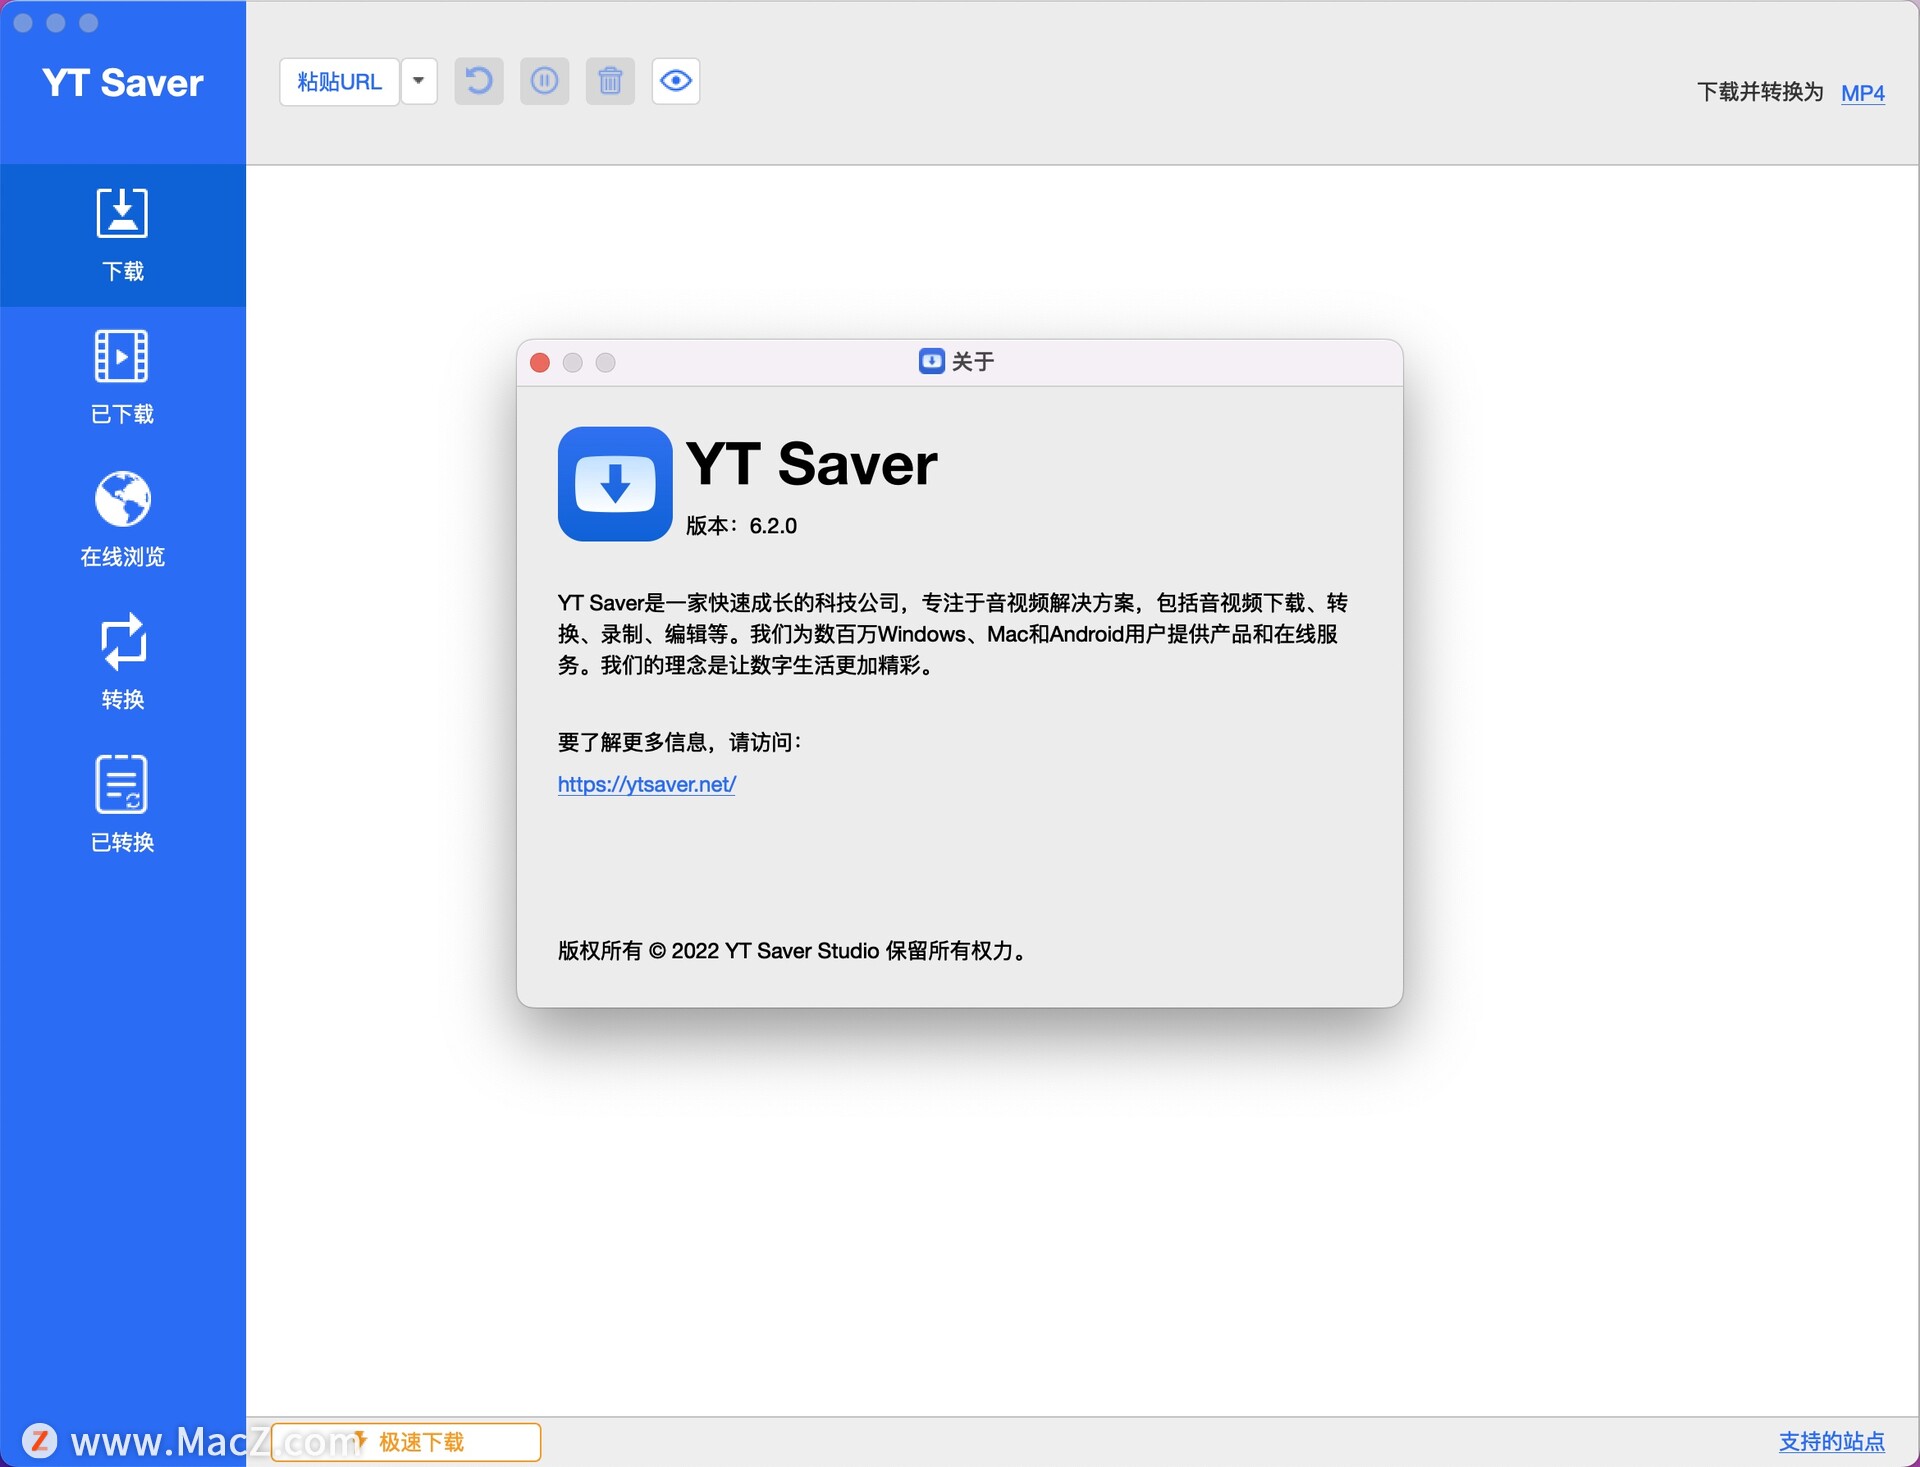 YT Saver 7.0.1 for windows instal